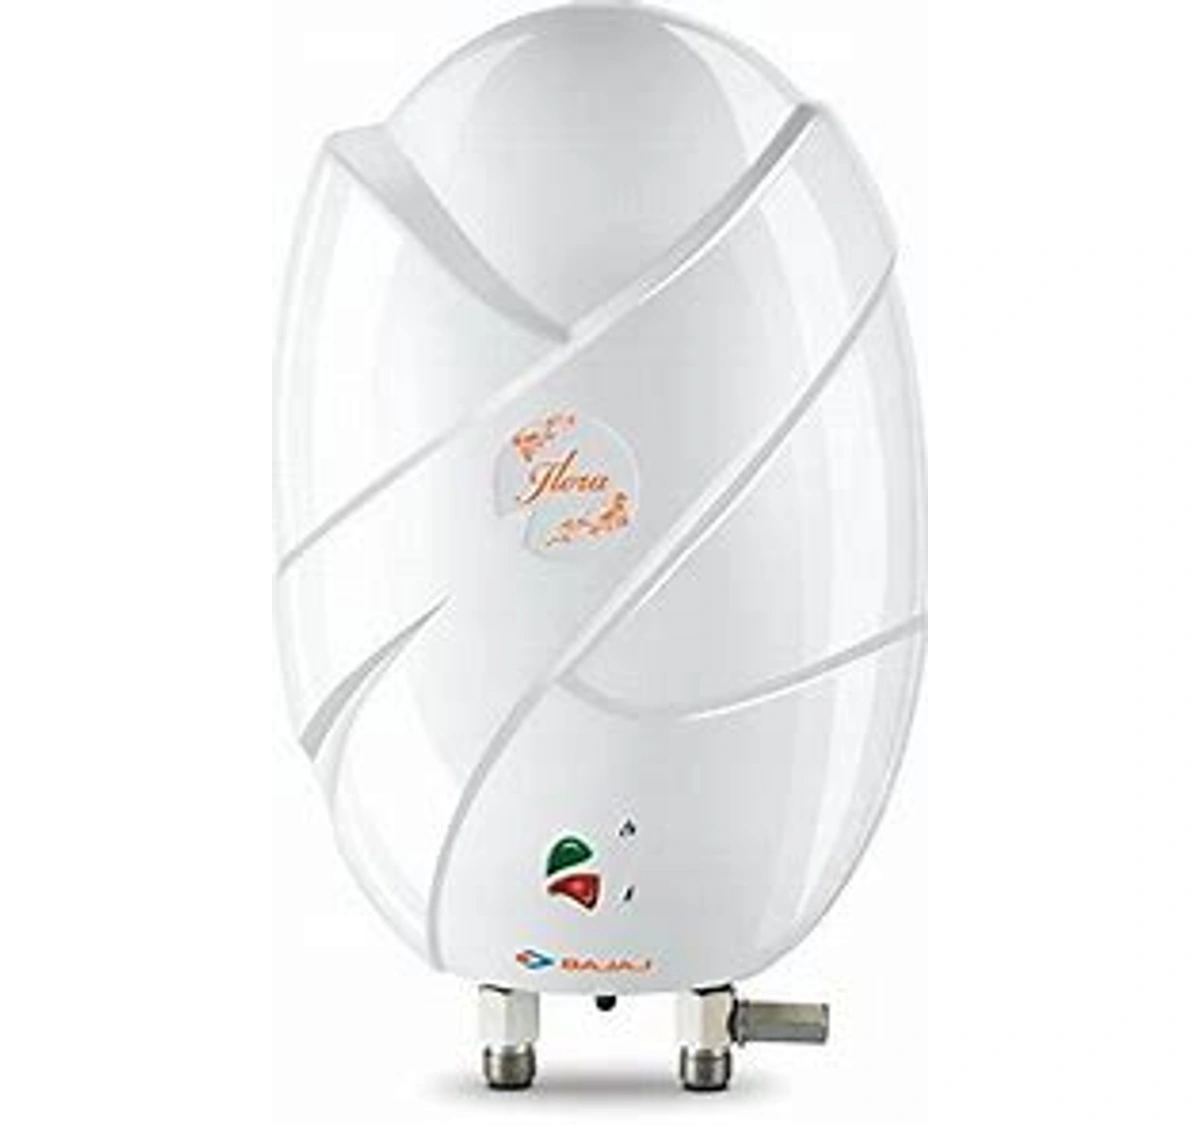 Bajaj Flora Instant Water Heater - 3 ltr - 4.5kw Online Price